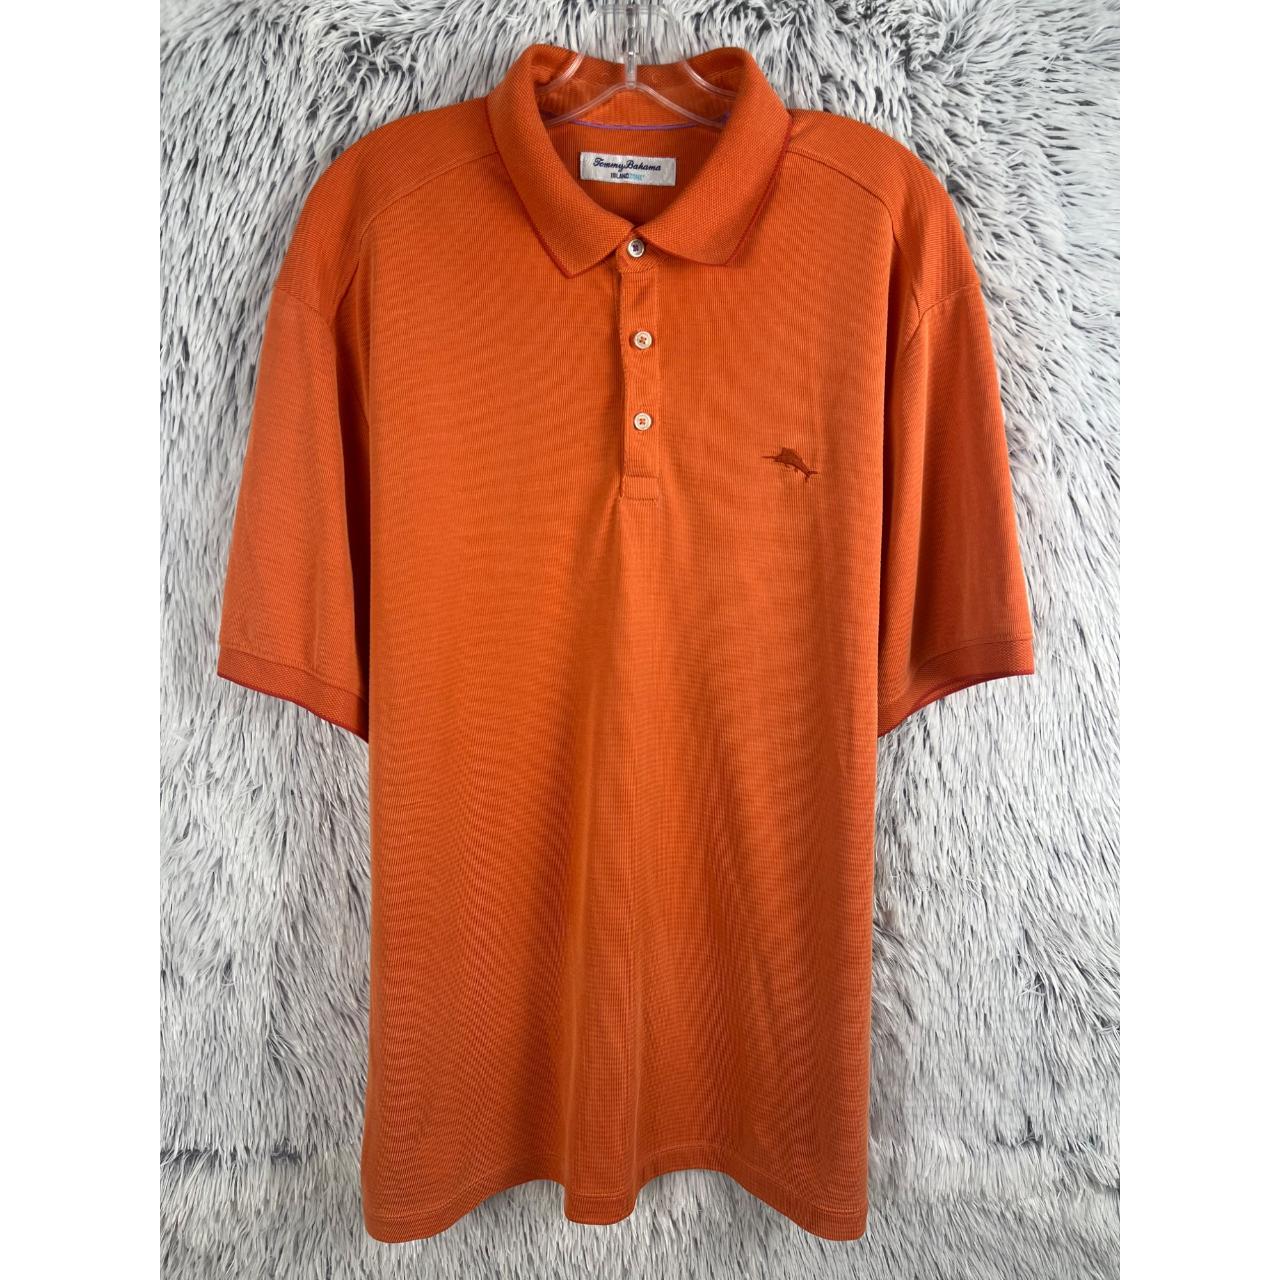 Tommy Bahama Island Zone Polo Shirt Mens XL Orange... - Depop